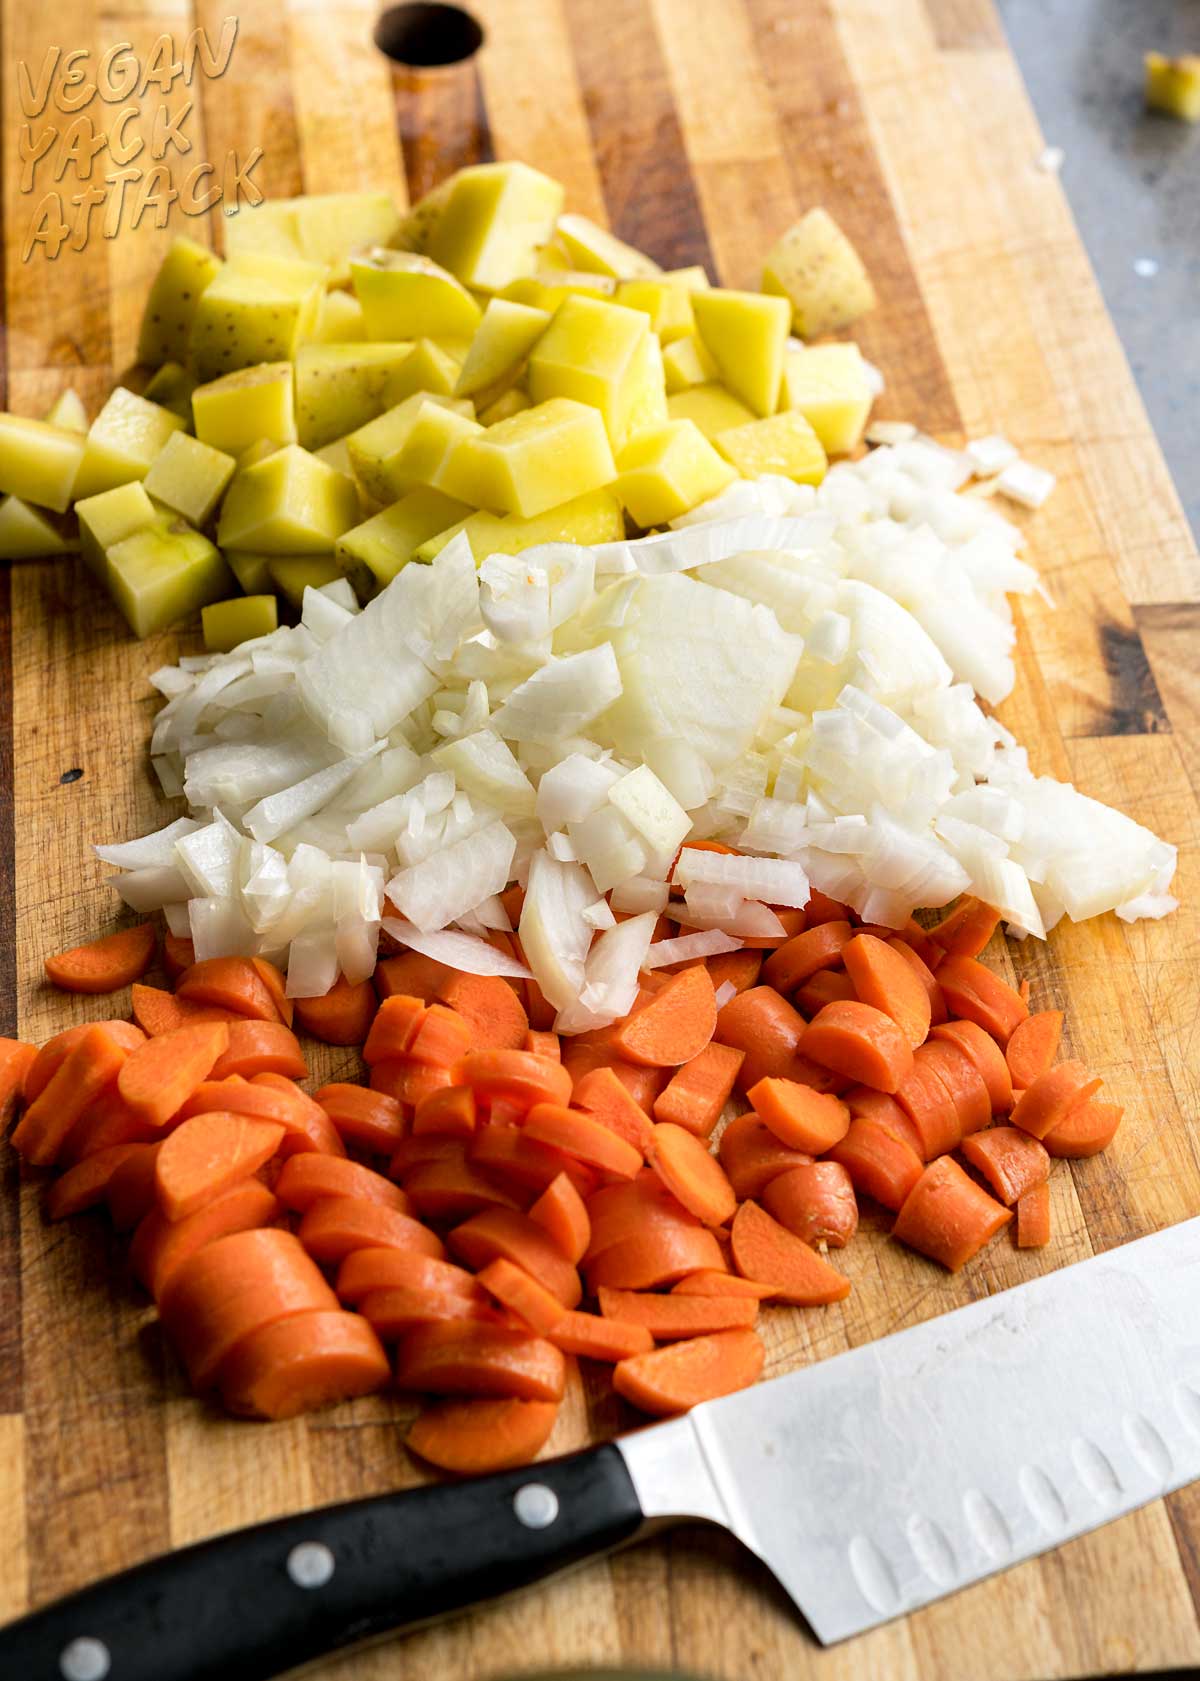 chopped carrots, onion, and potato on a cutting board